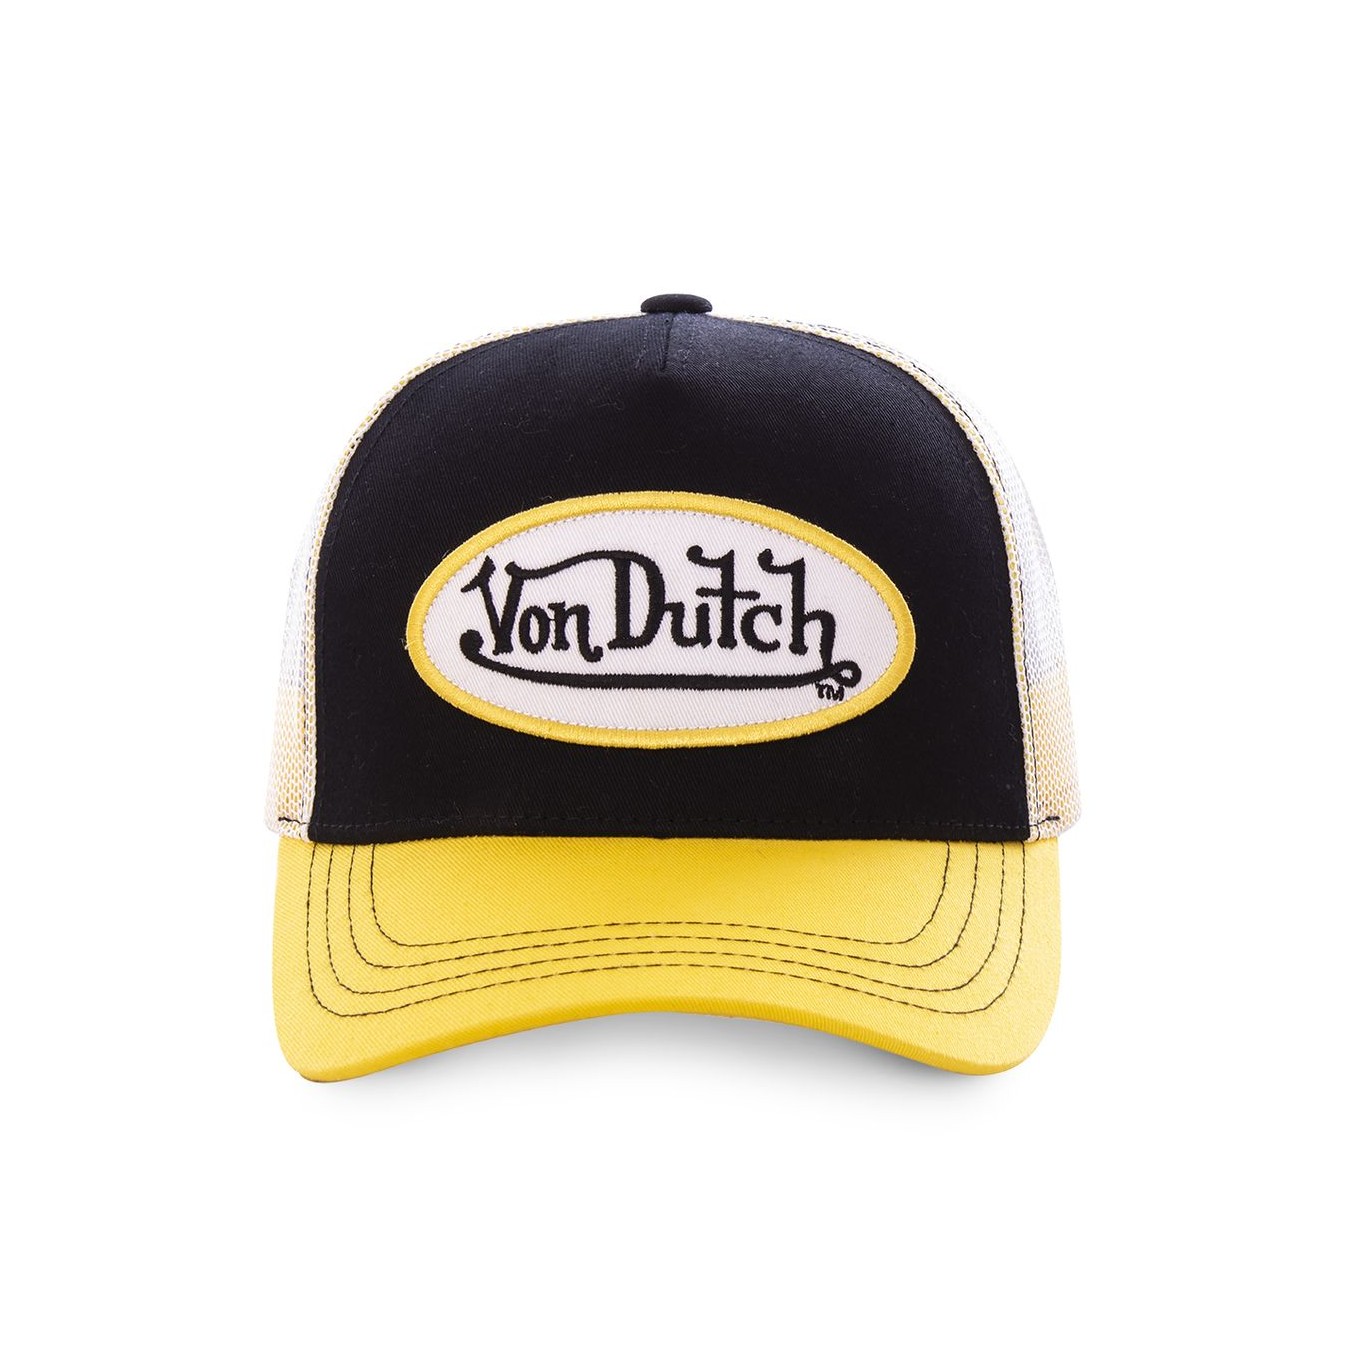 Casquette baseball Von Dutch Colors Jaune et Noir - Von Dutch